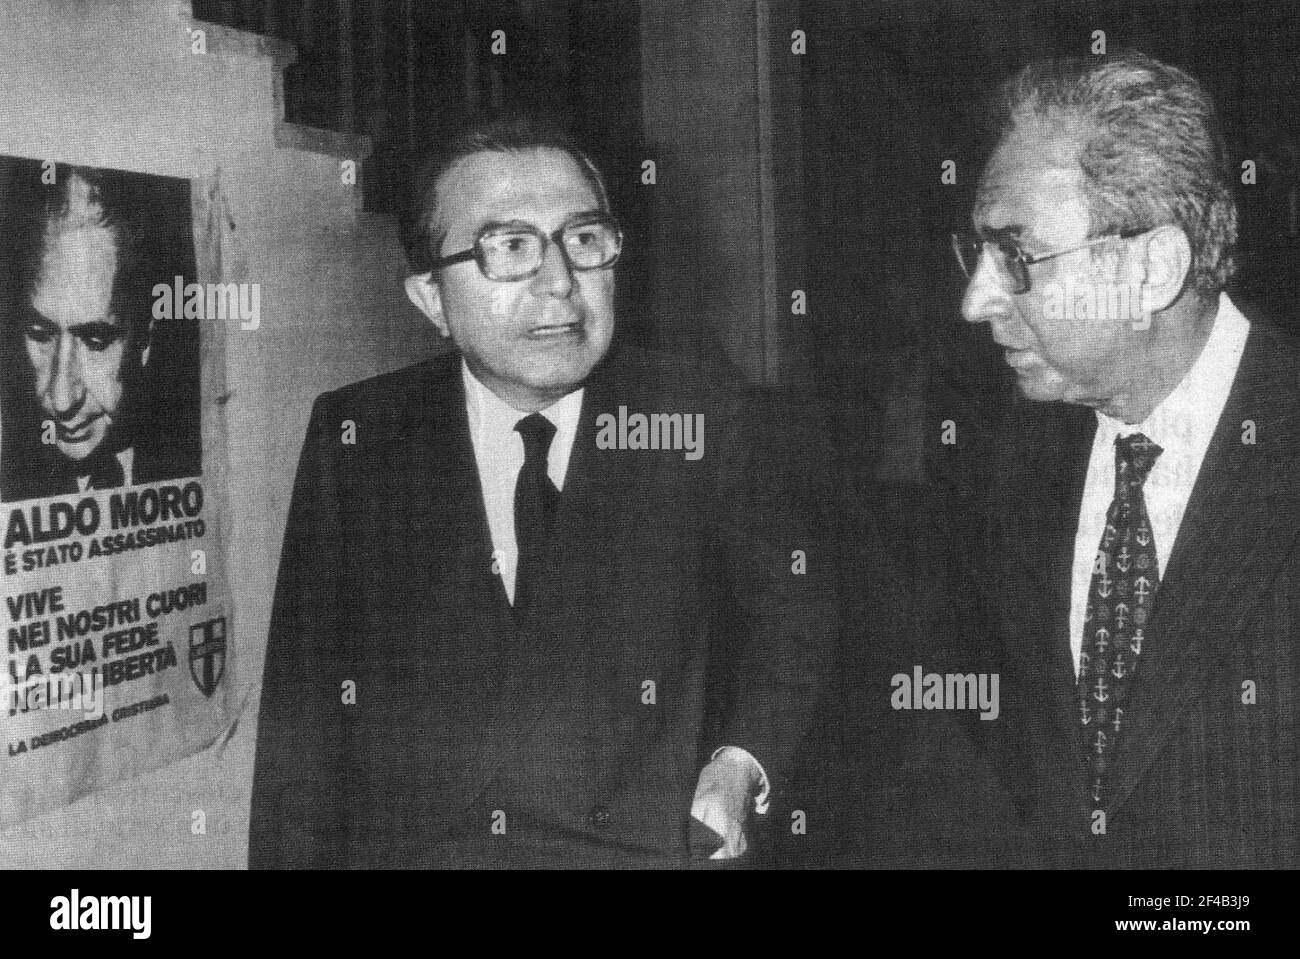 Italian politicans Giulio Andreotti and Francesco Cossiga (after 1978 - per poster of assasinated Aldo Moro poster in background) Stock Photo